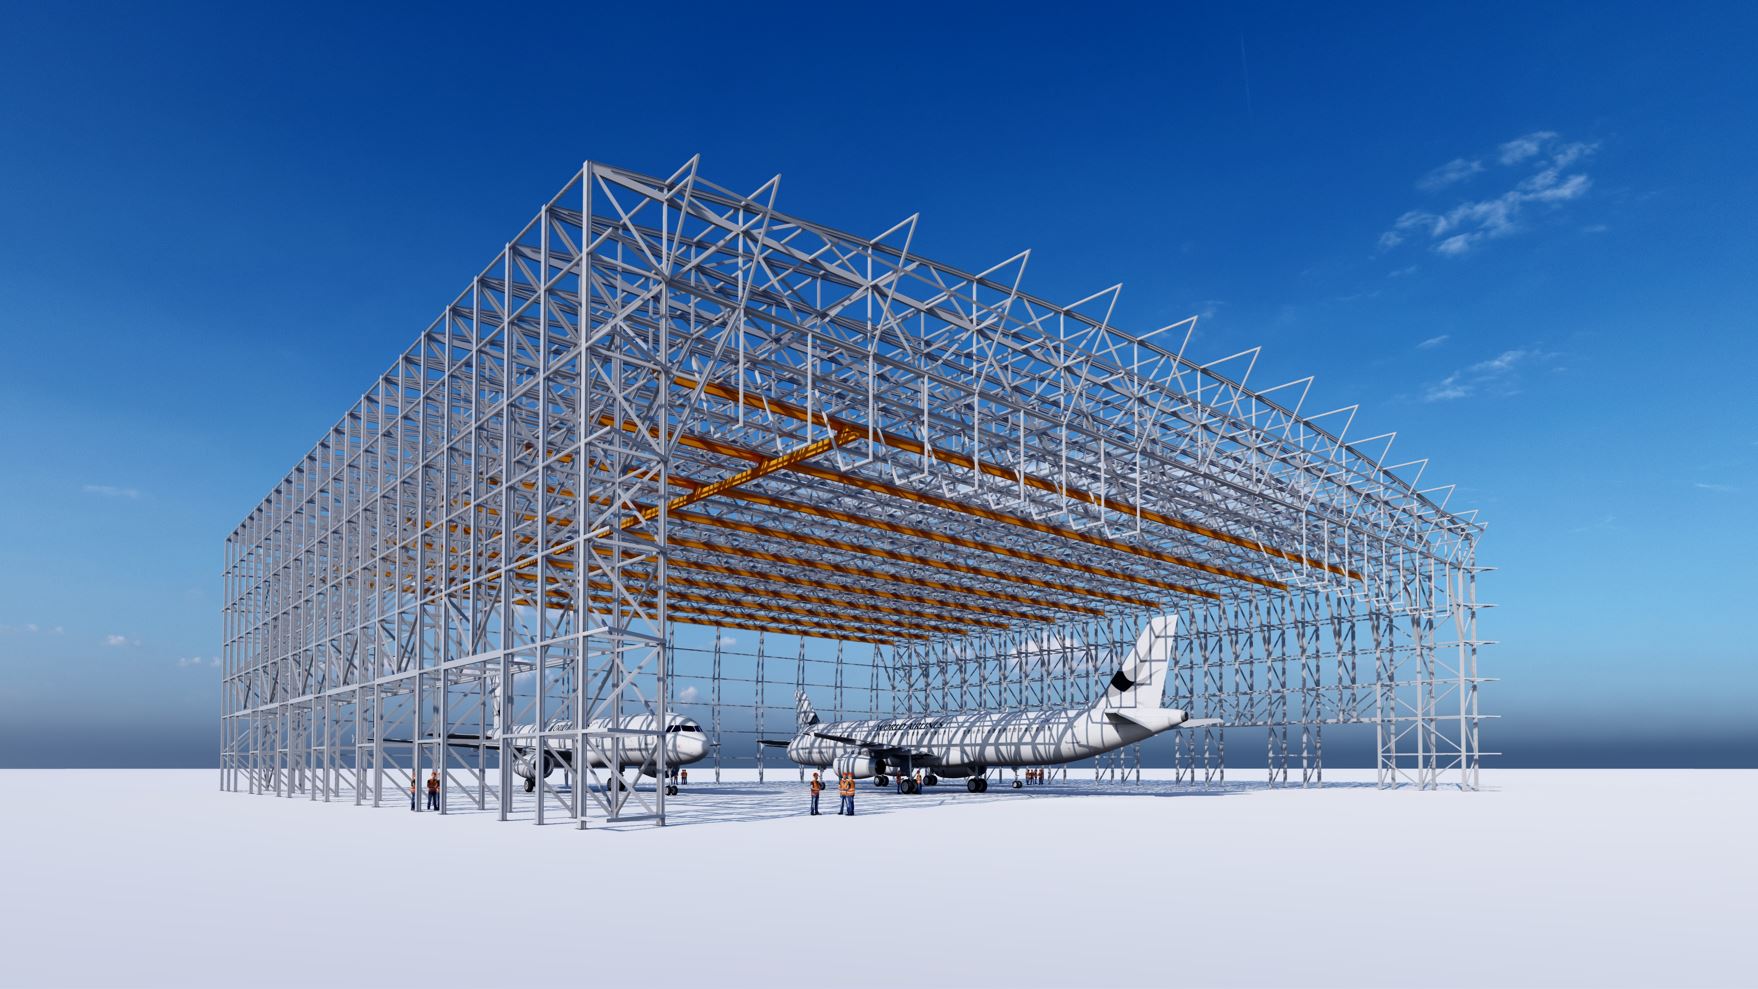 PAC hangar